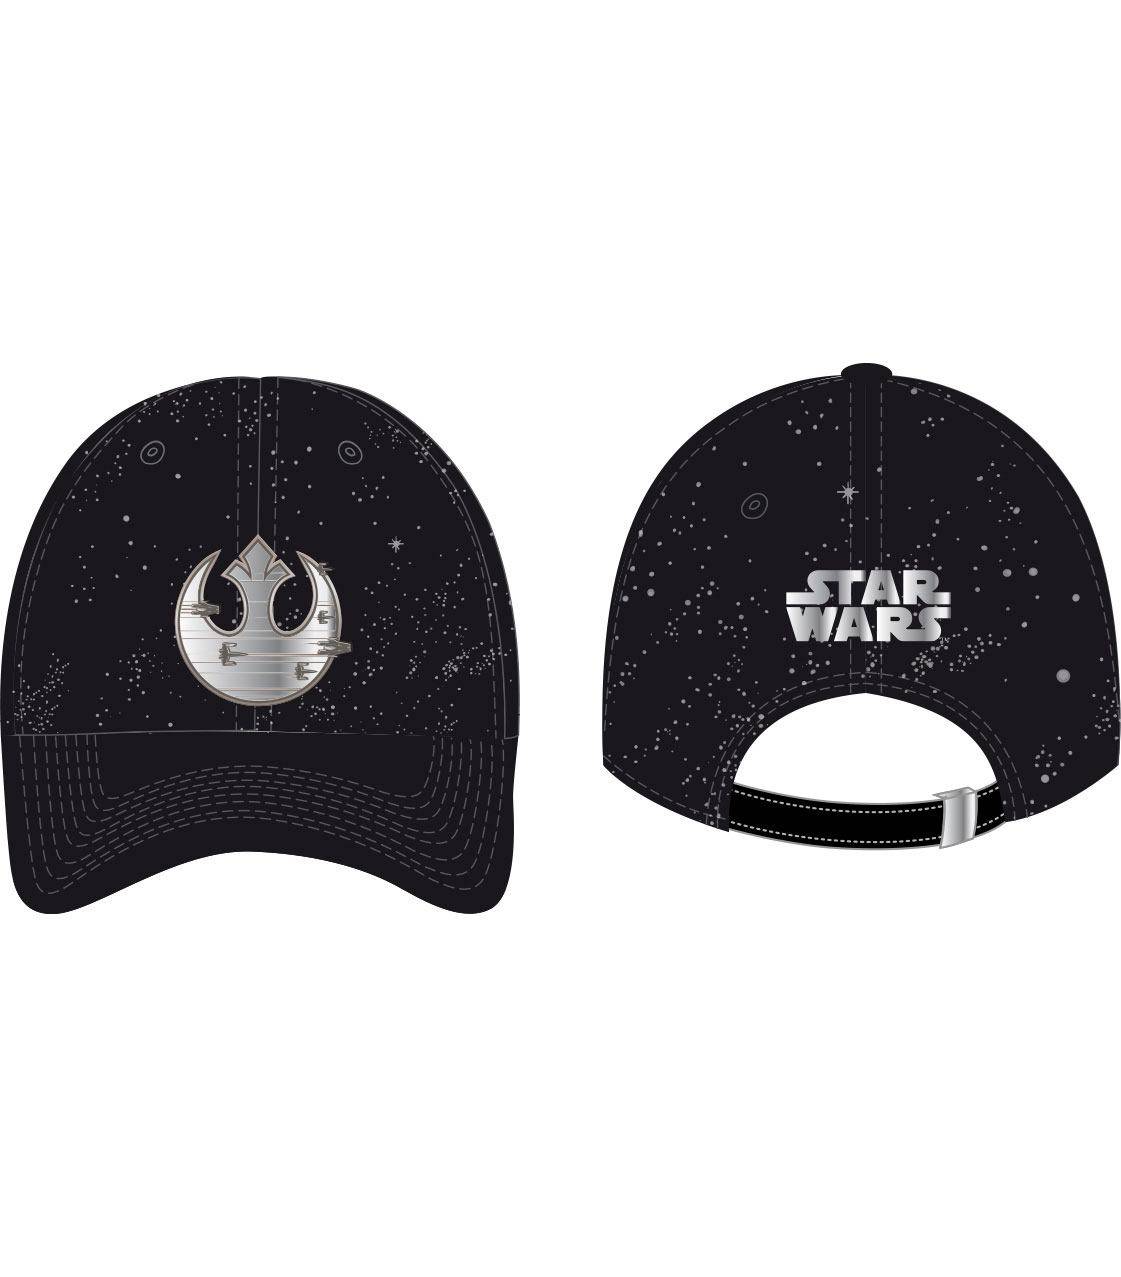 Casquettes et bonnets - Star Wars Episode VIII casquette baseball Rebe